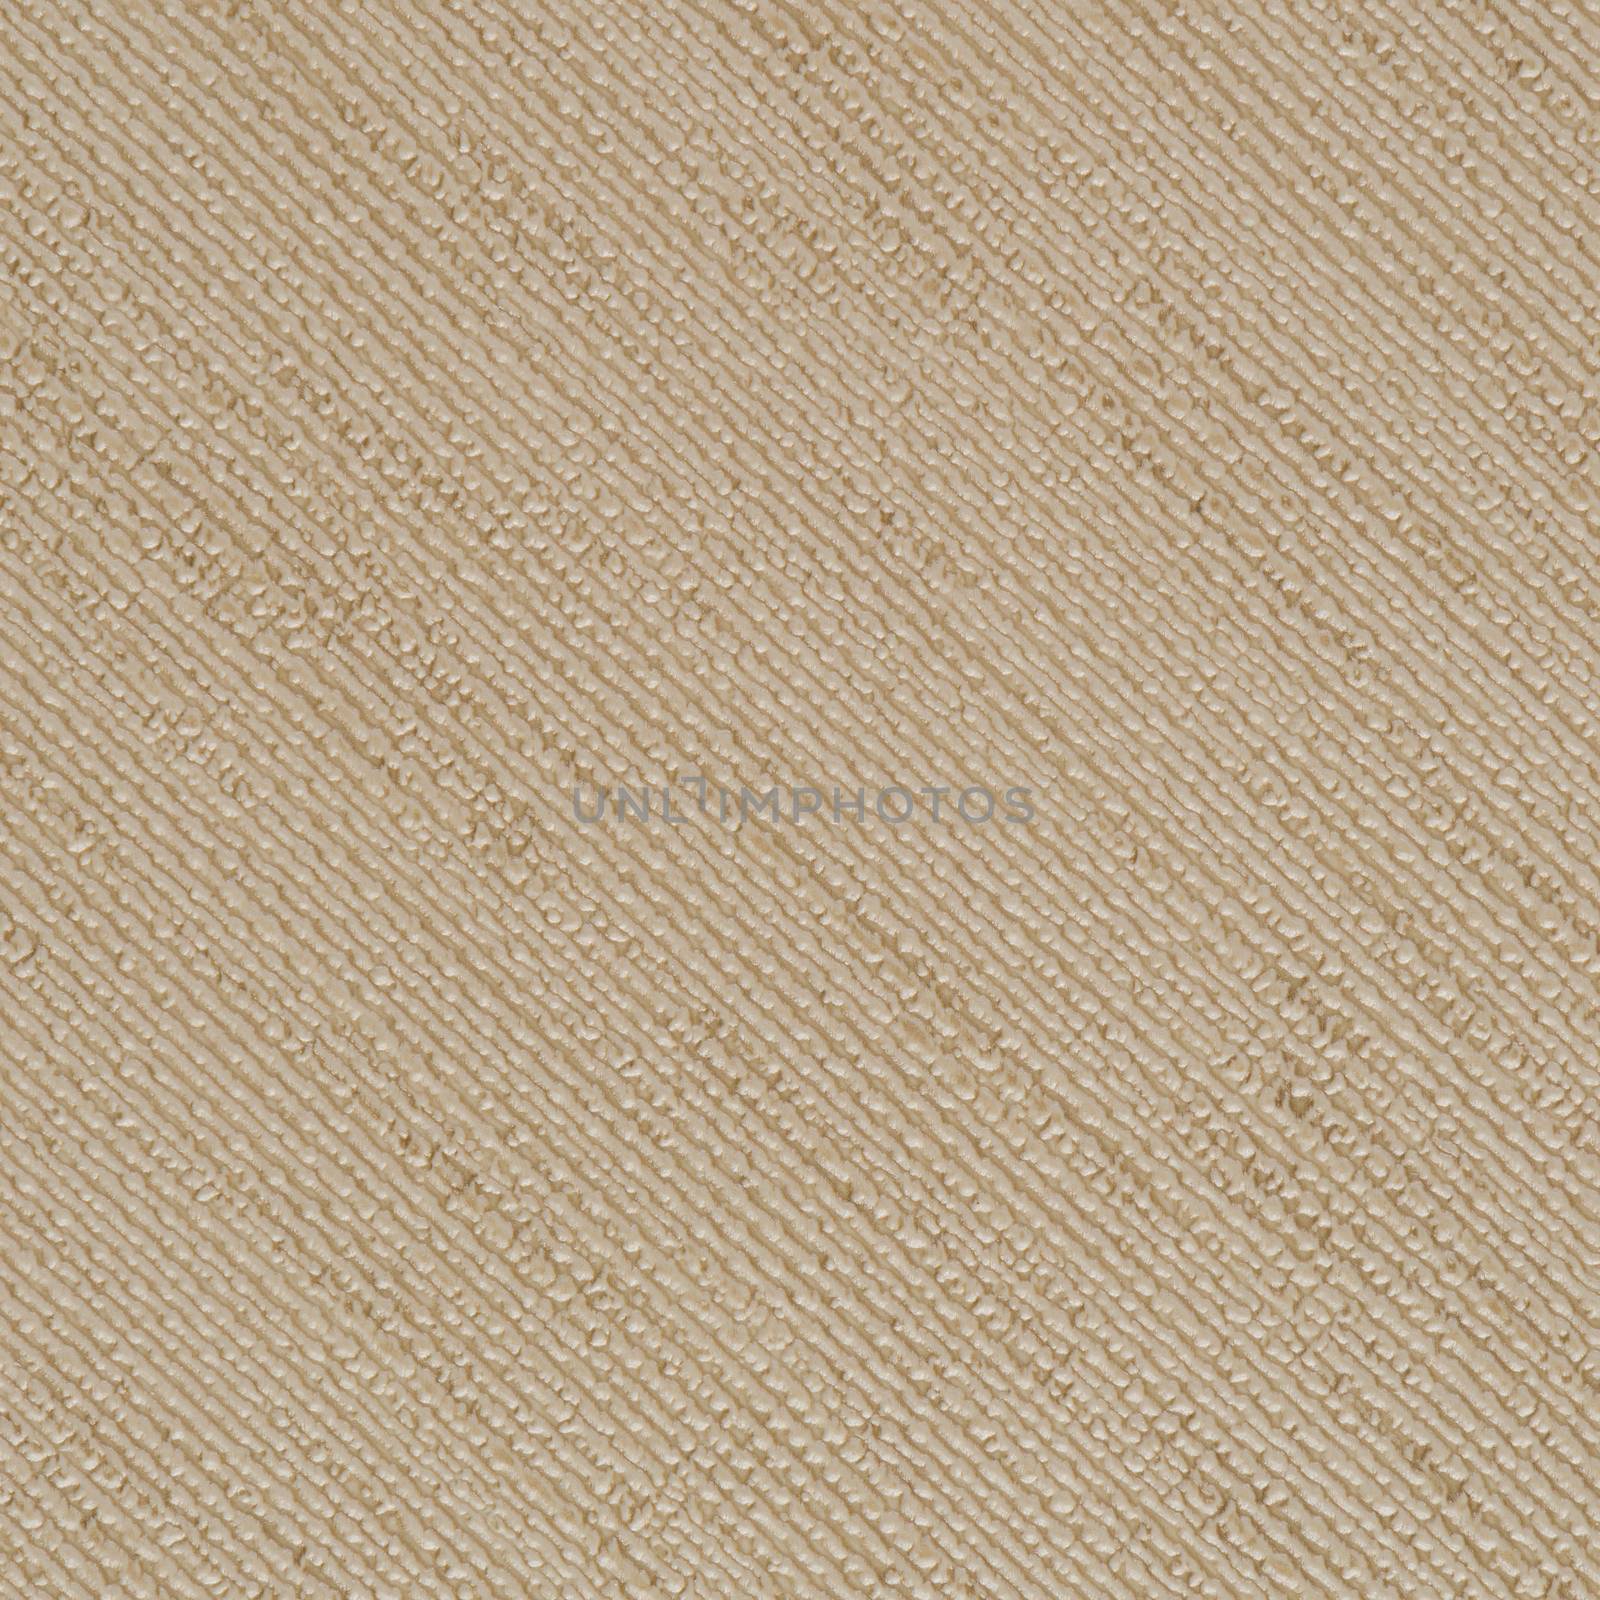 Brown vinyl texture by homydesign